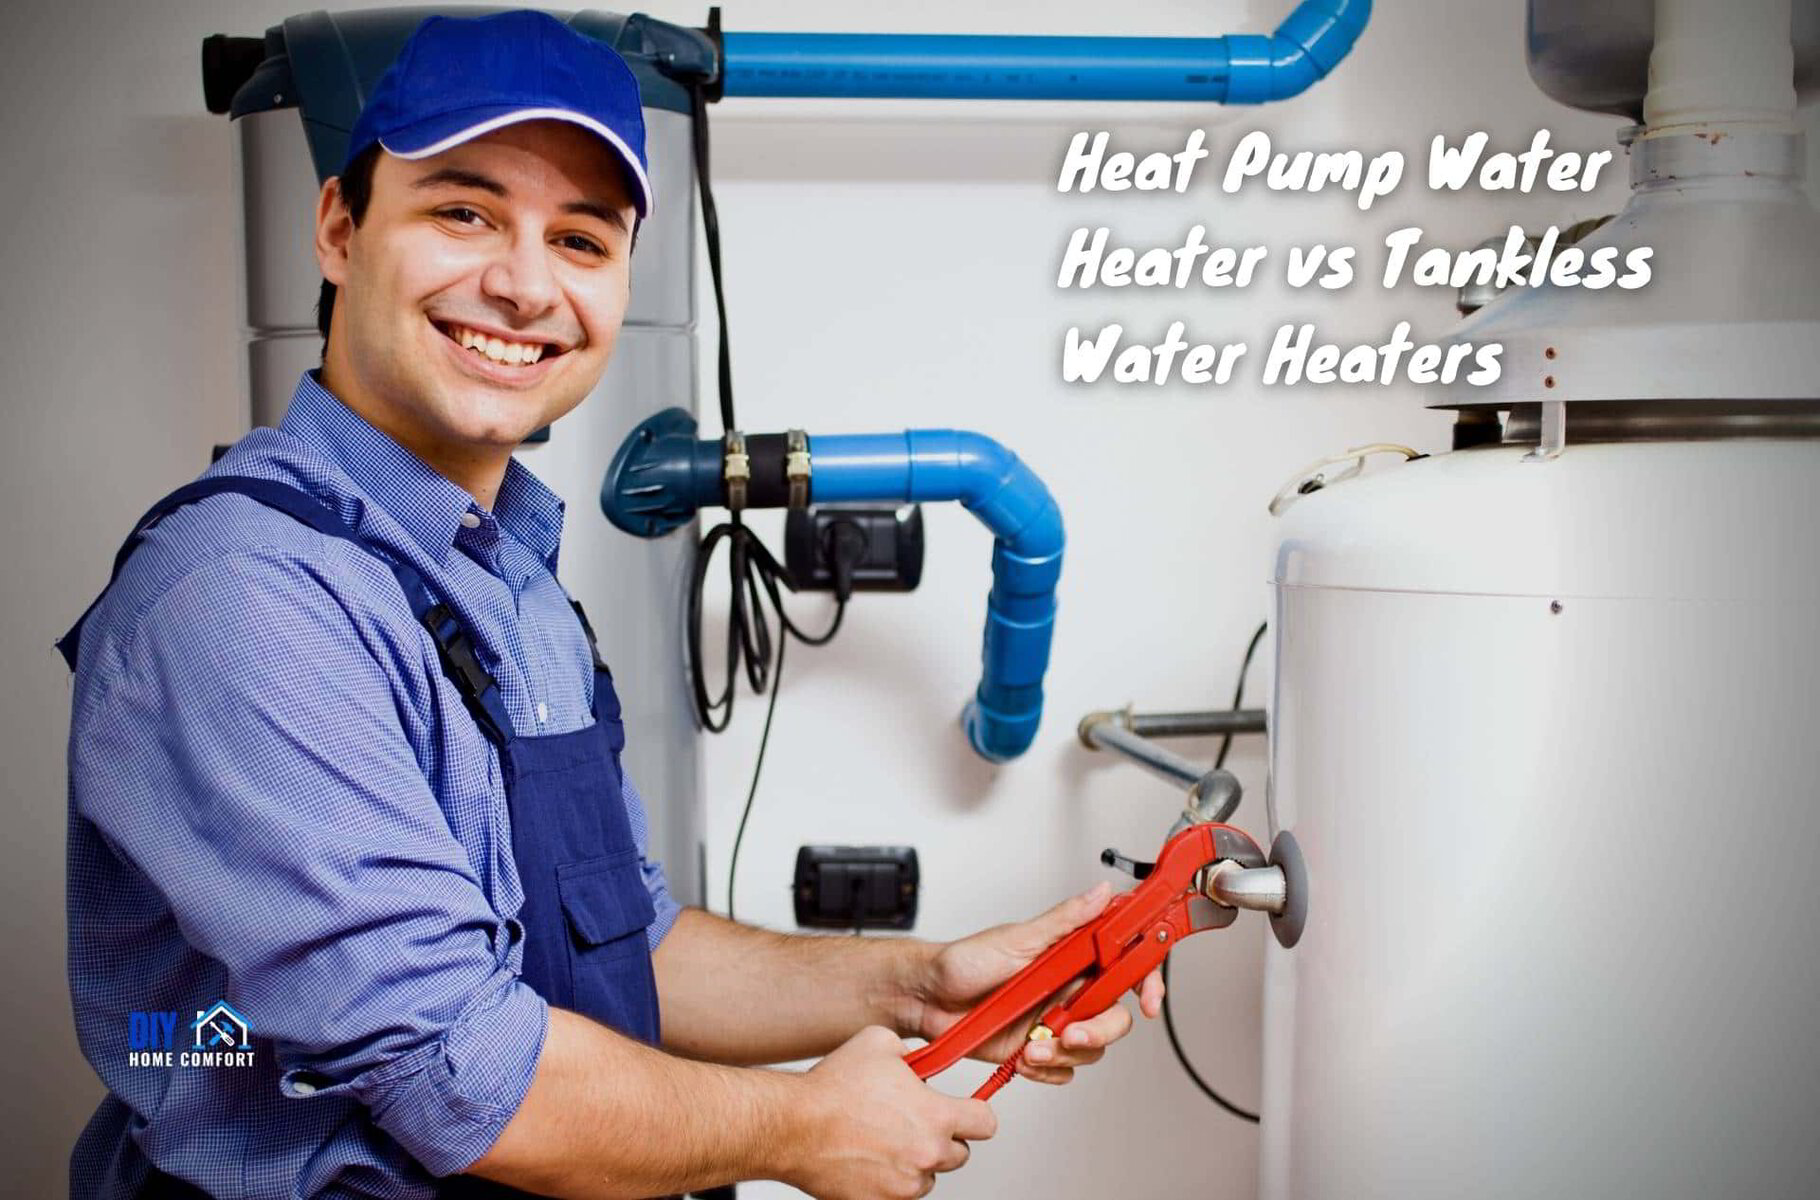 heat-pump-water-heater-vs-tankless-water-heaters-diy-home-comfort